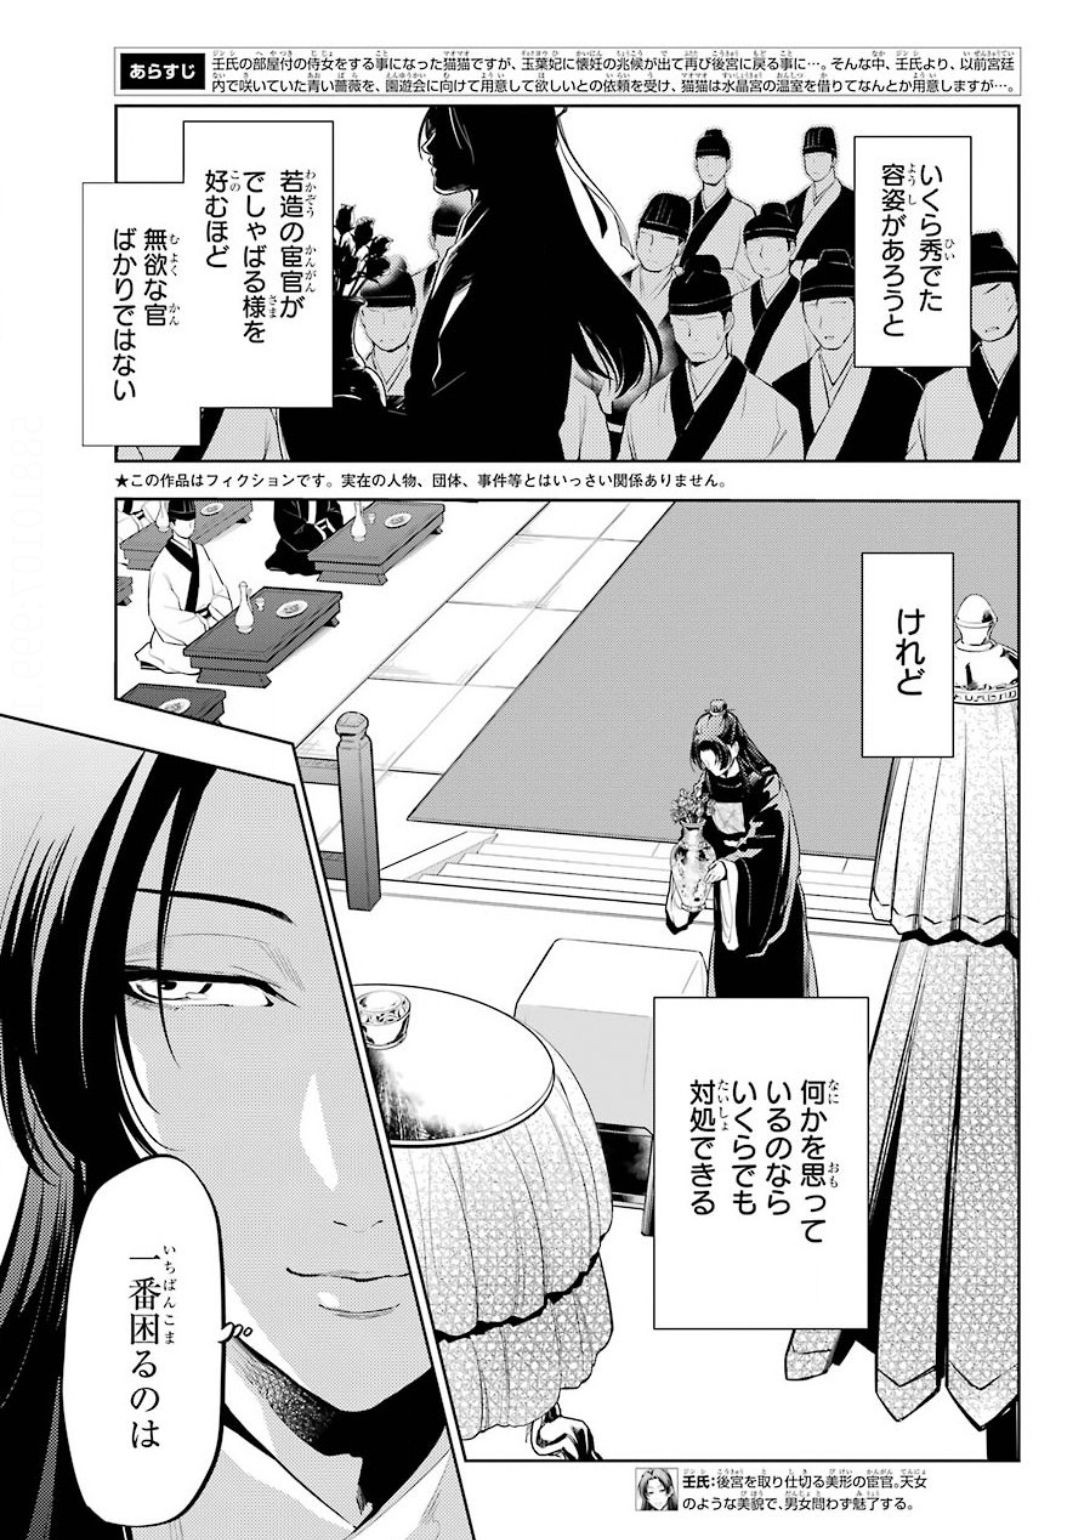 Kusuriya no Hitorigoto - Chapter 36-2 - Page 2